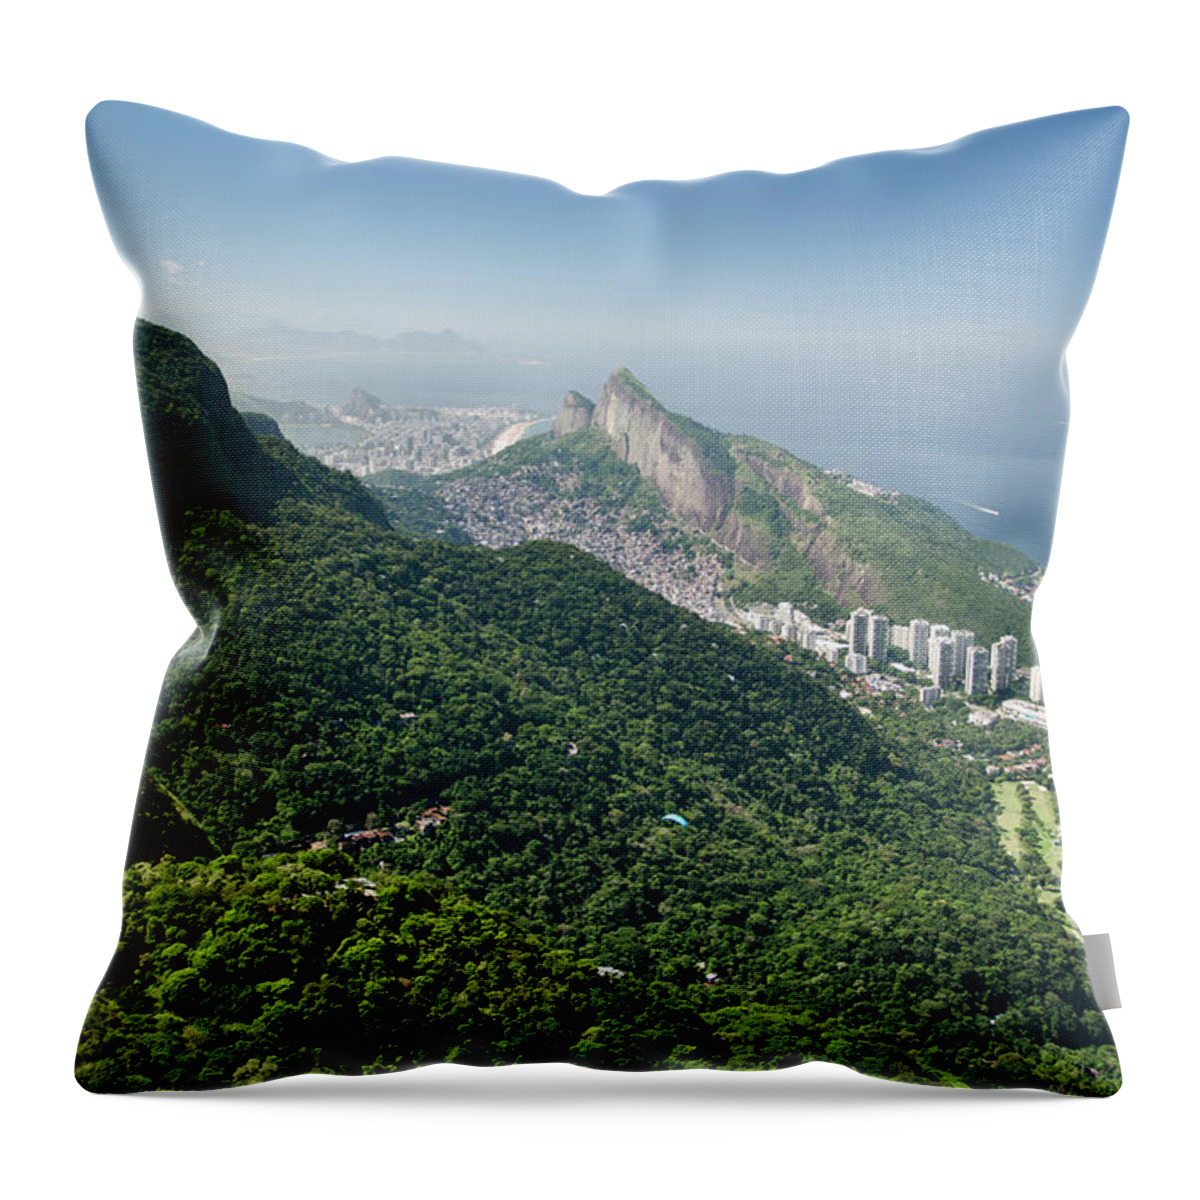 Scenics Throw Pillow featuring the photograph Rio De Janeiro View by Eduleite